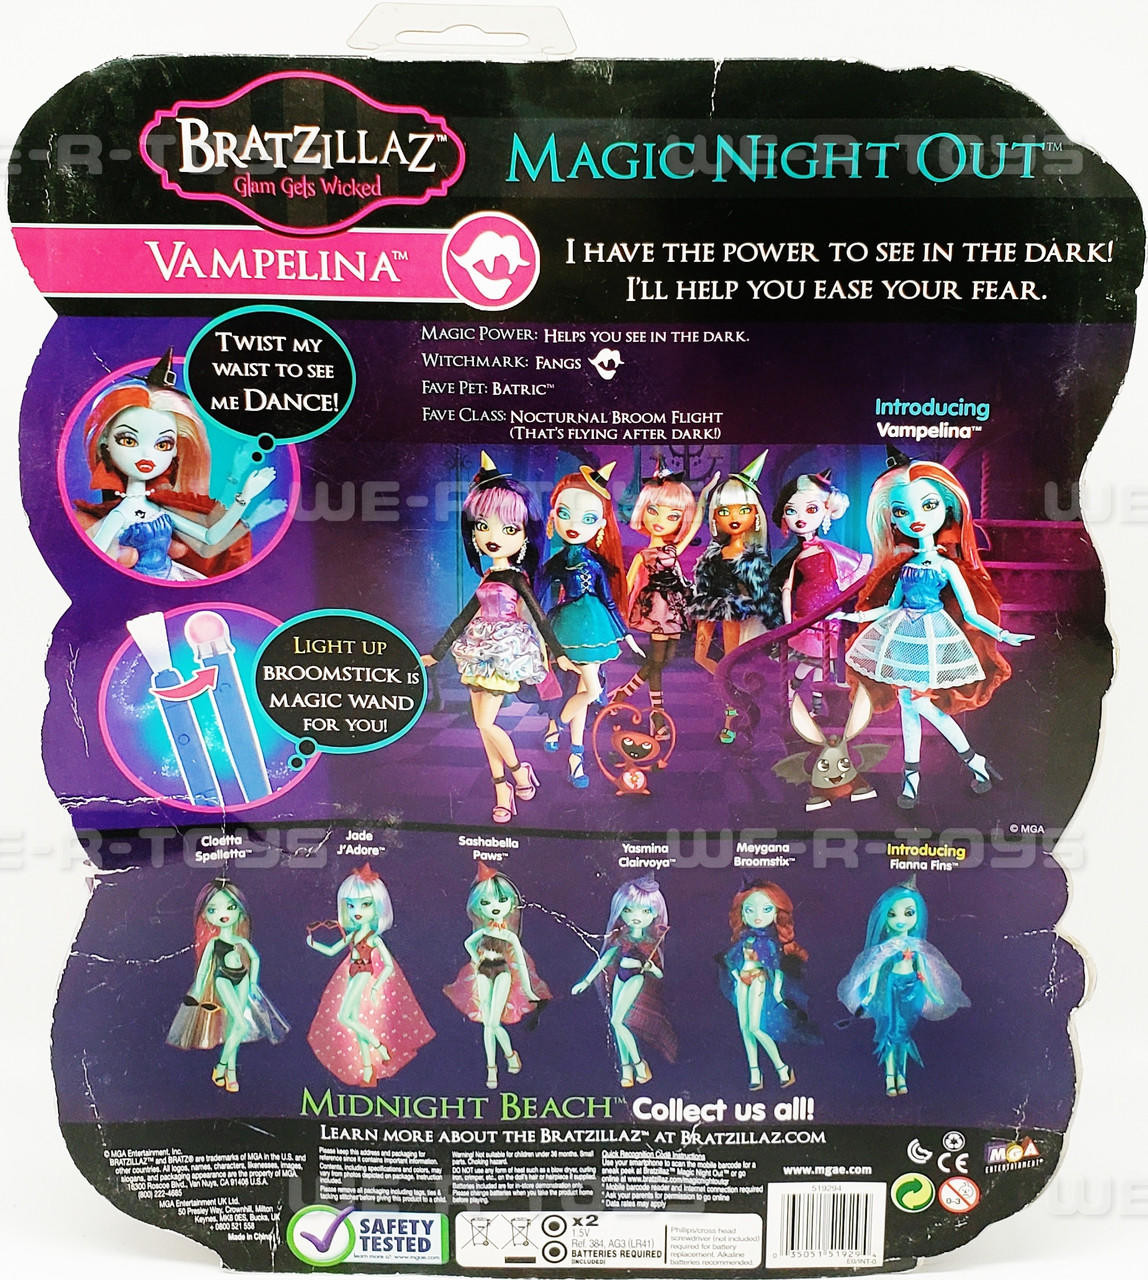 Bratzilla Magic Night Out Vampelina Doll With Light Up Broom Stick